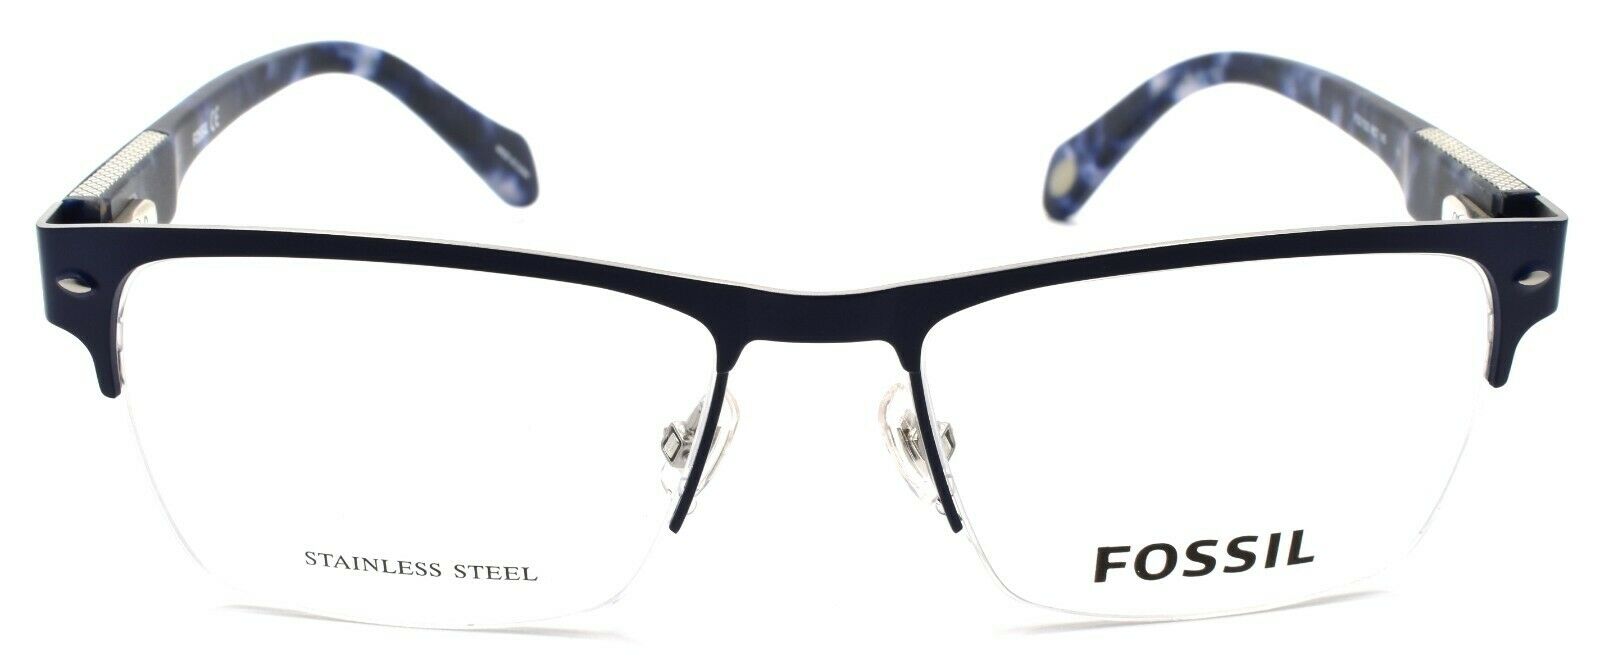 2-Fossil FOS 7020 RCT Men's Eyeglasses Frames Half-rim 53-17-145 Matte Blue-716736029009-IKSpecs